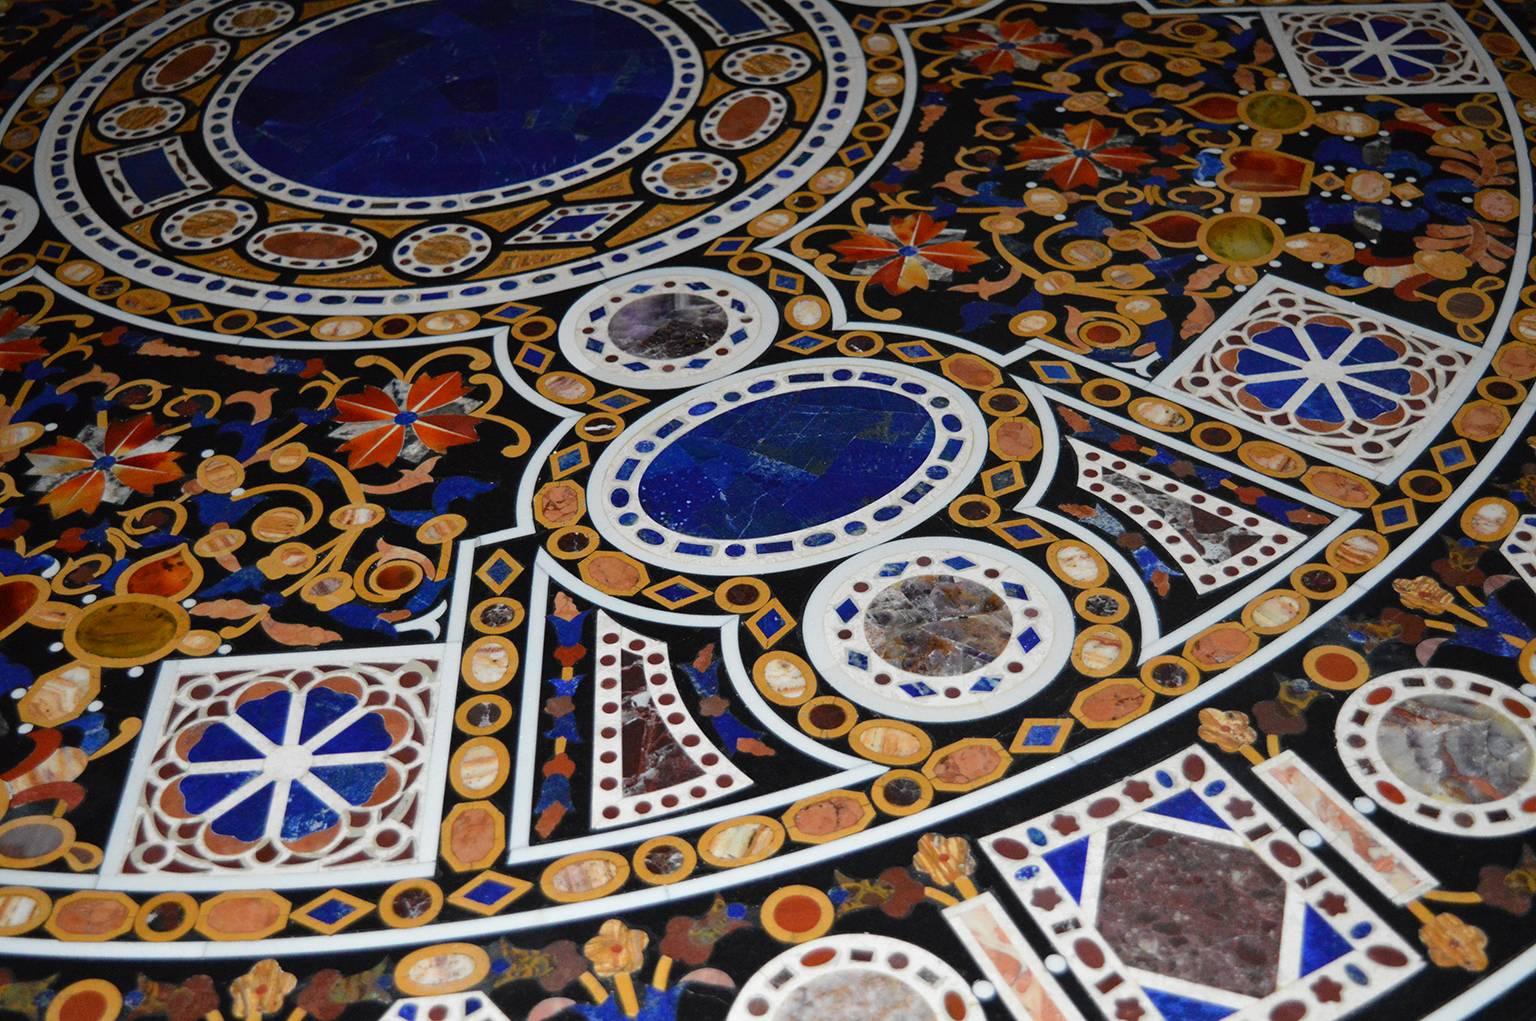 Pietra Dura Empire table. With inlayed lapis lazuli, amethyst, precious gems. Wood is ebony Macassar.